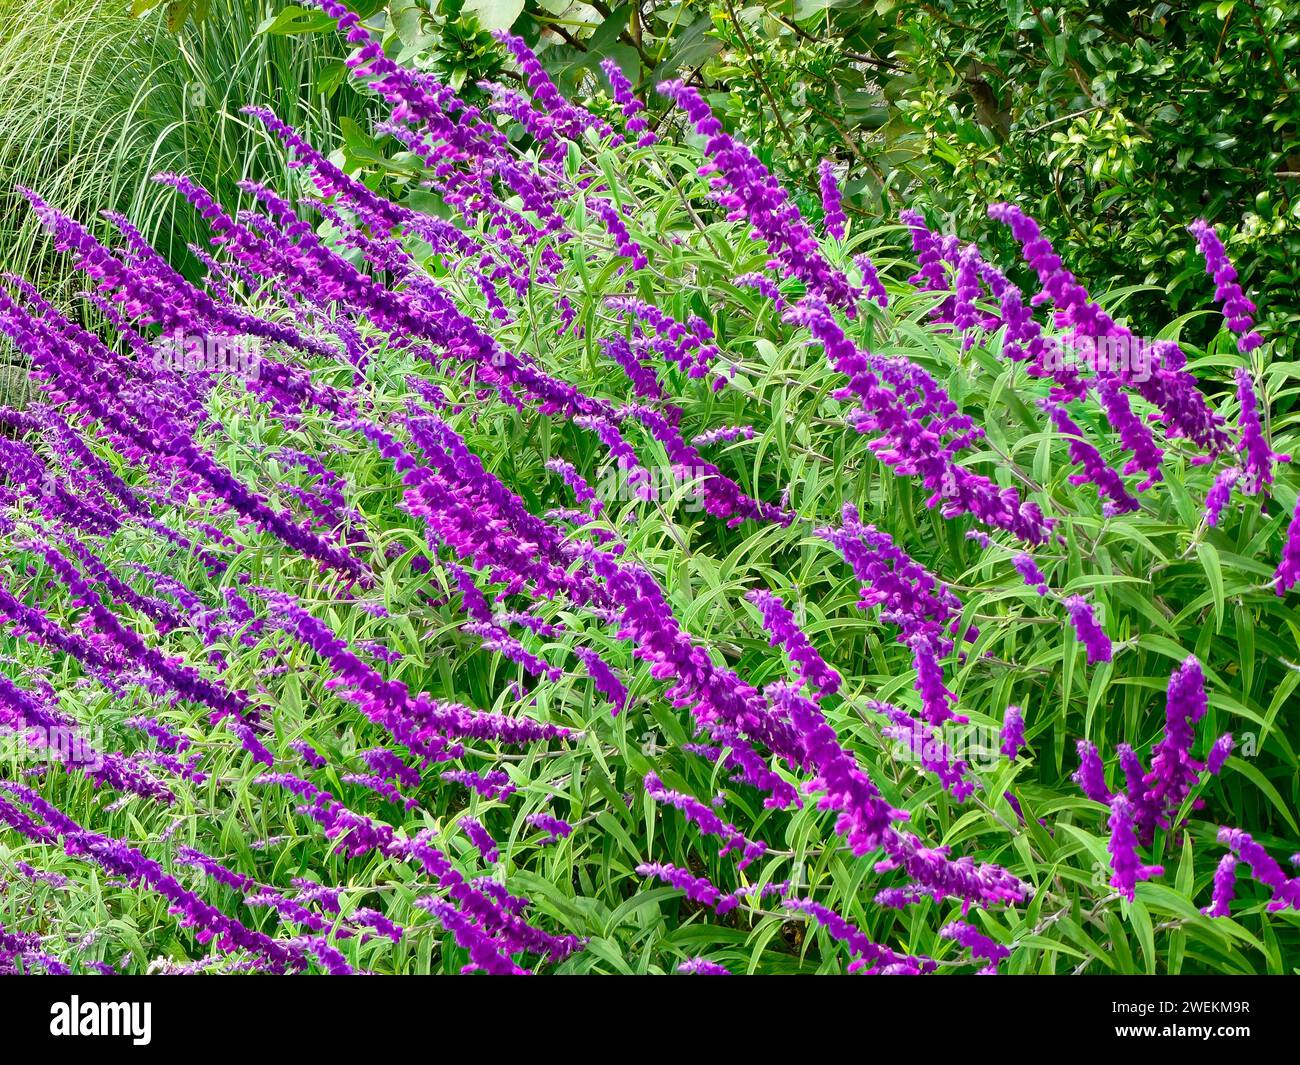 The purple Mexican Bush Sage, salvia leucantha flowers near green grass Stock Photo